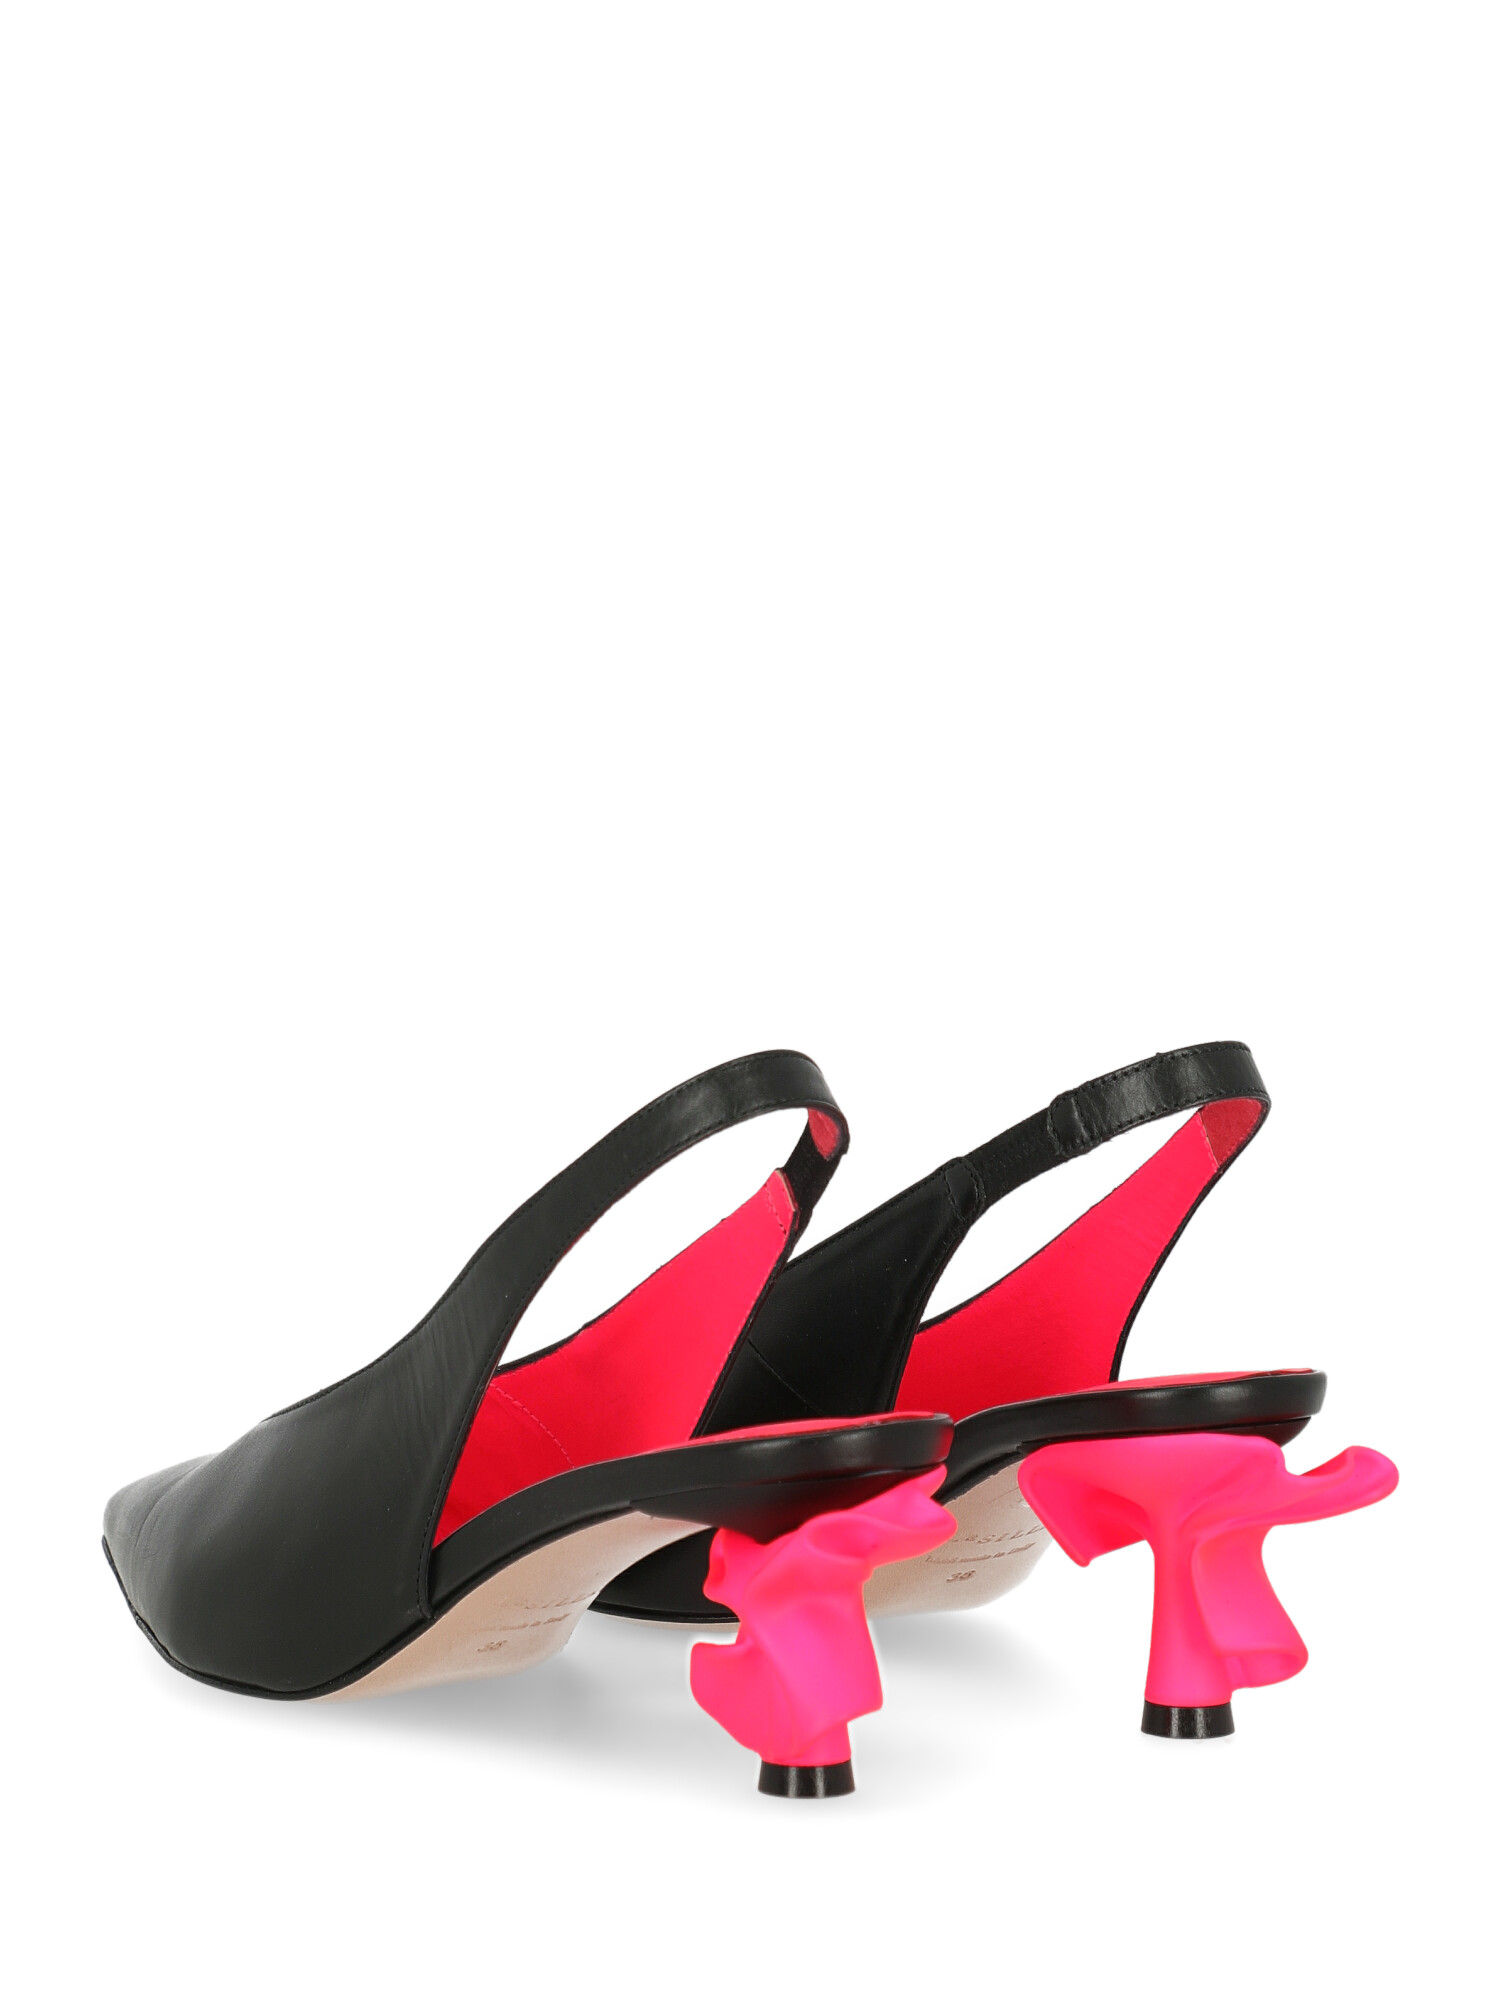 Le Silla Special Price Women Shoes Mules Black, Neon IT 38 | eBay